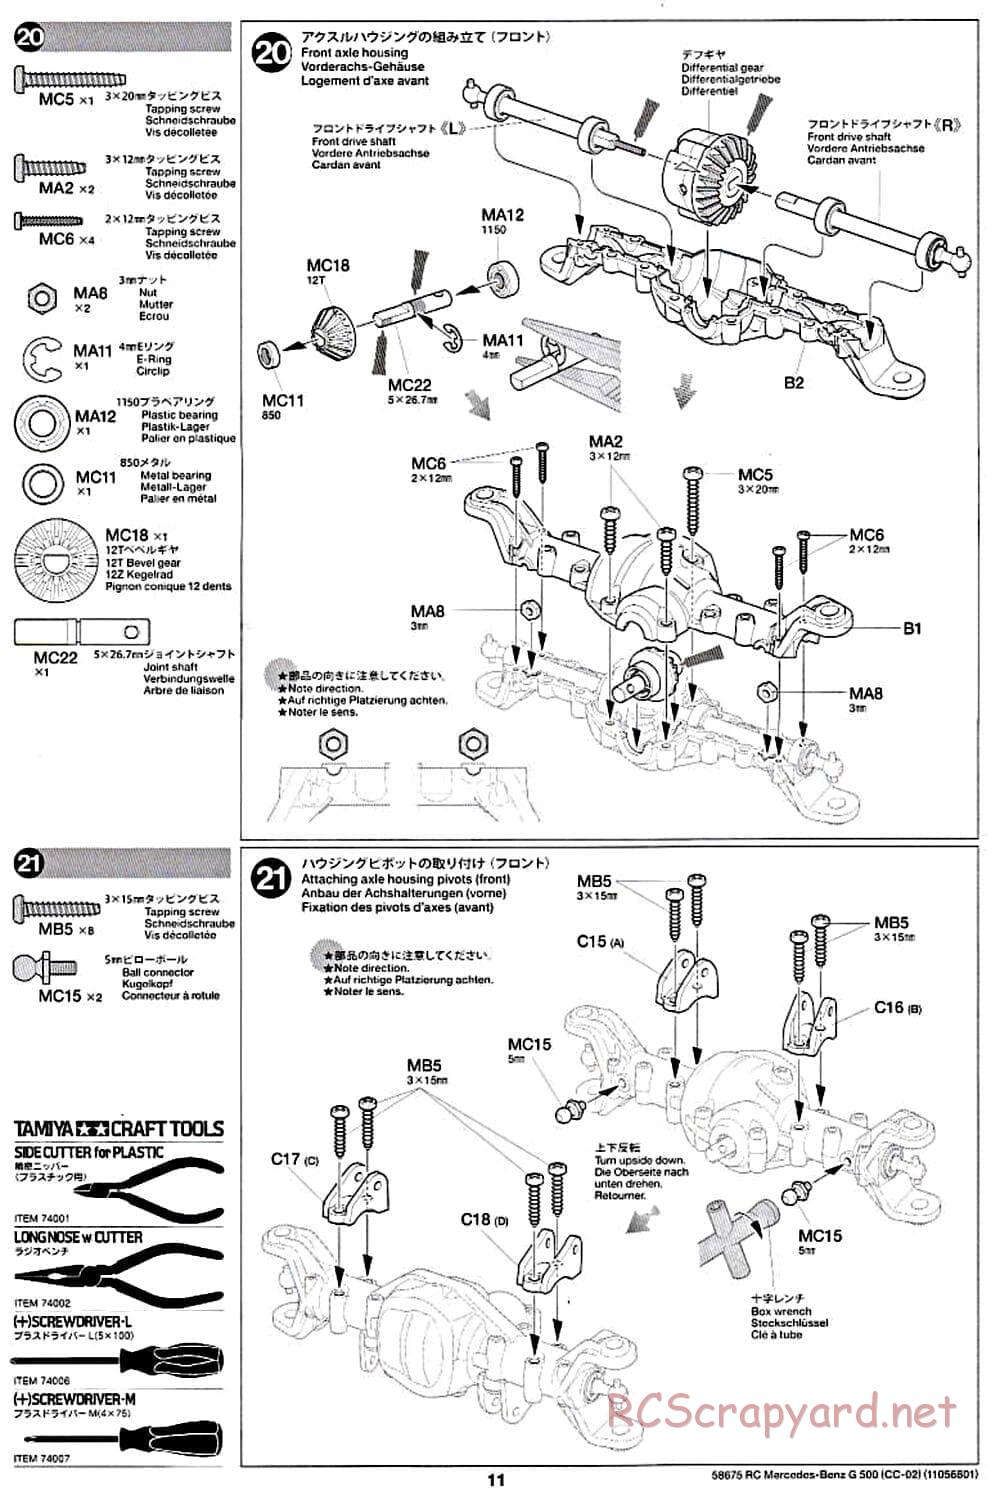 Tamiya - Mercedes-Benz G500 - CC-02 Chassis - Manual - Page 11